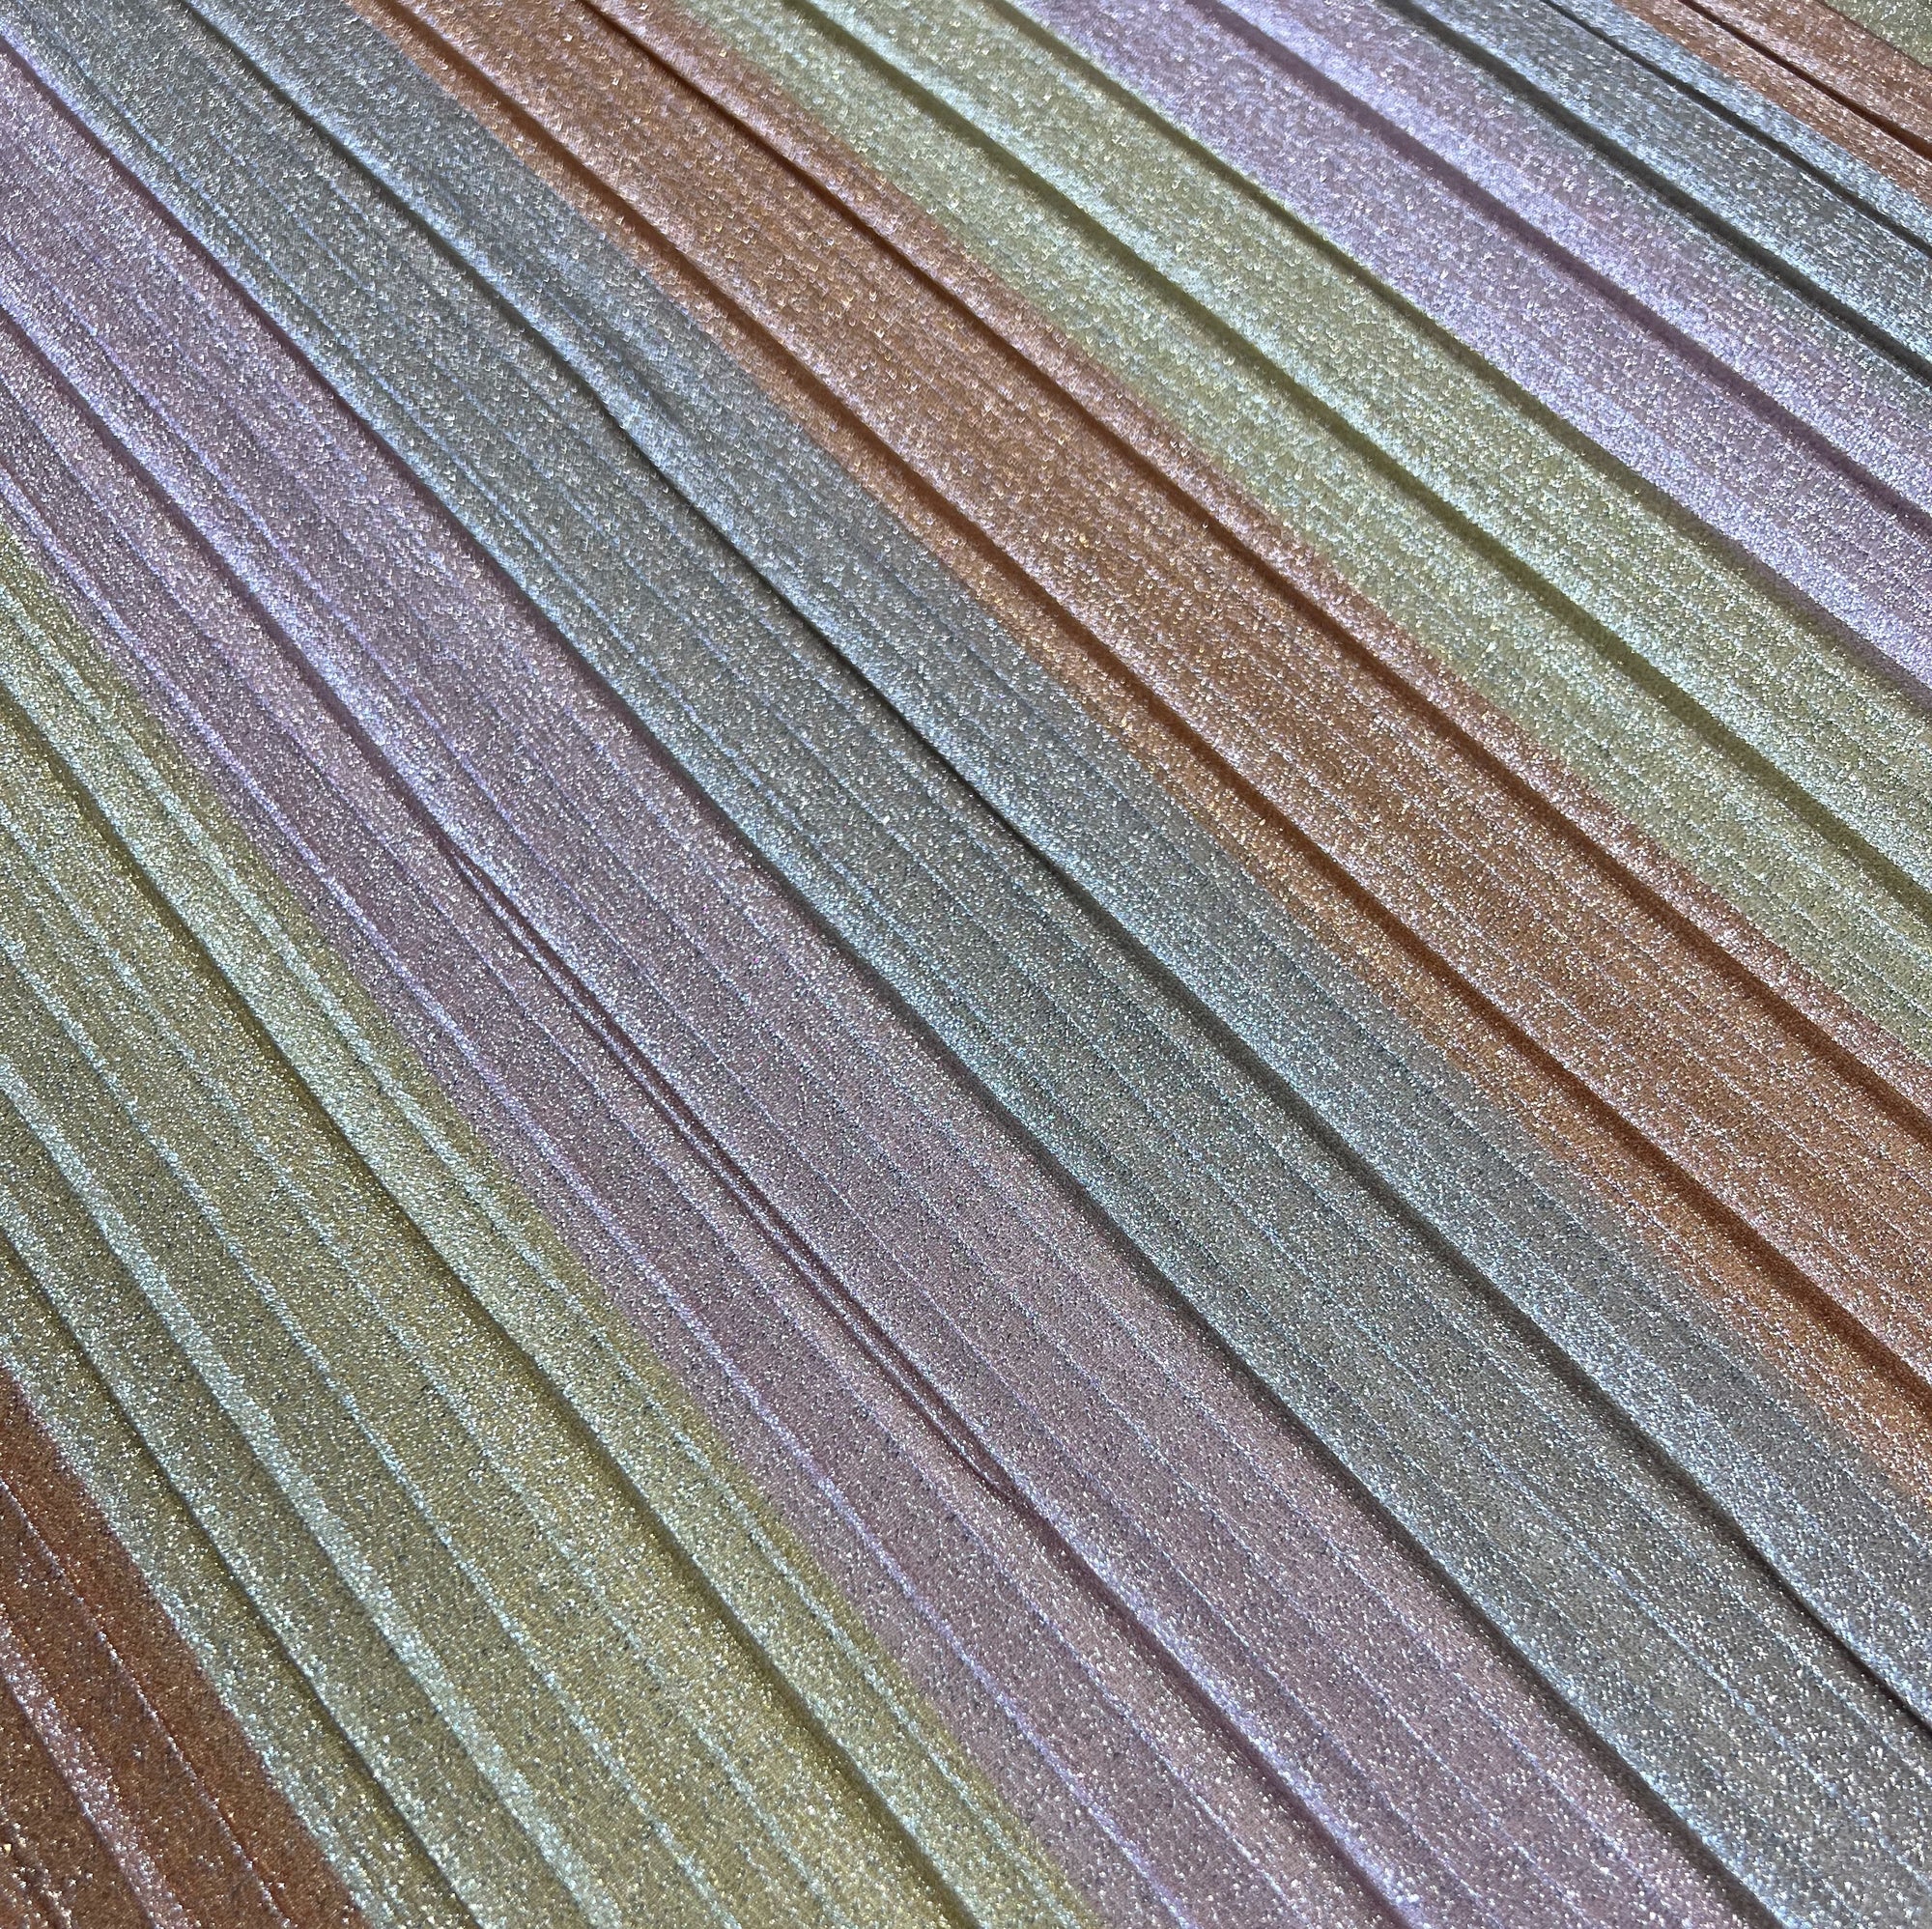 Fabric - pleated soft and radiant rainbow